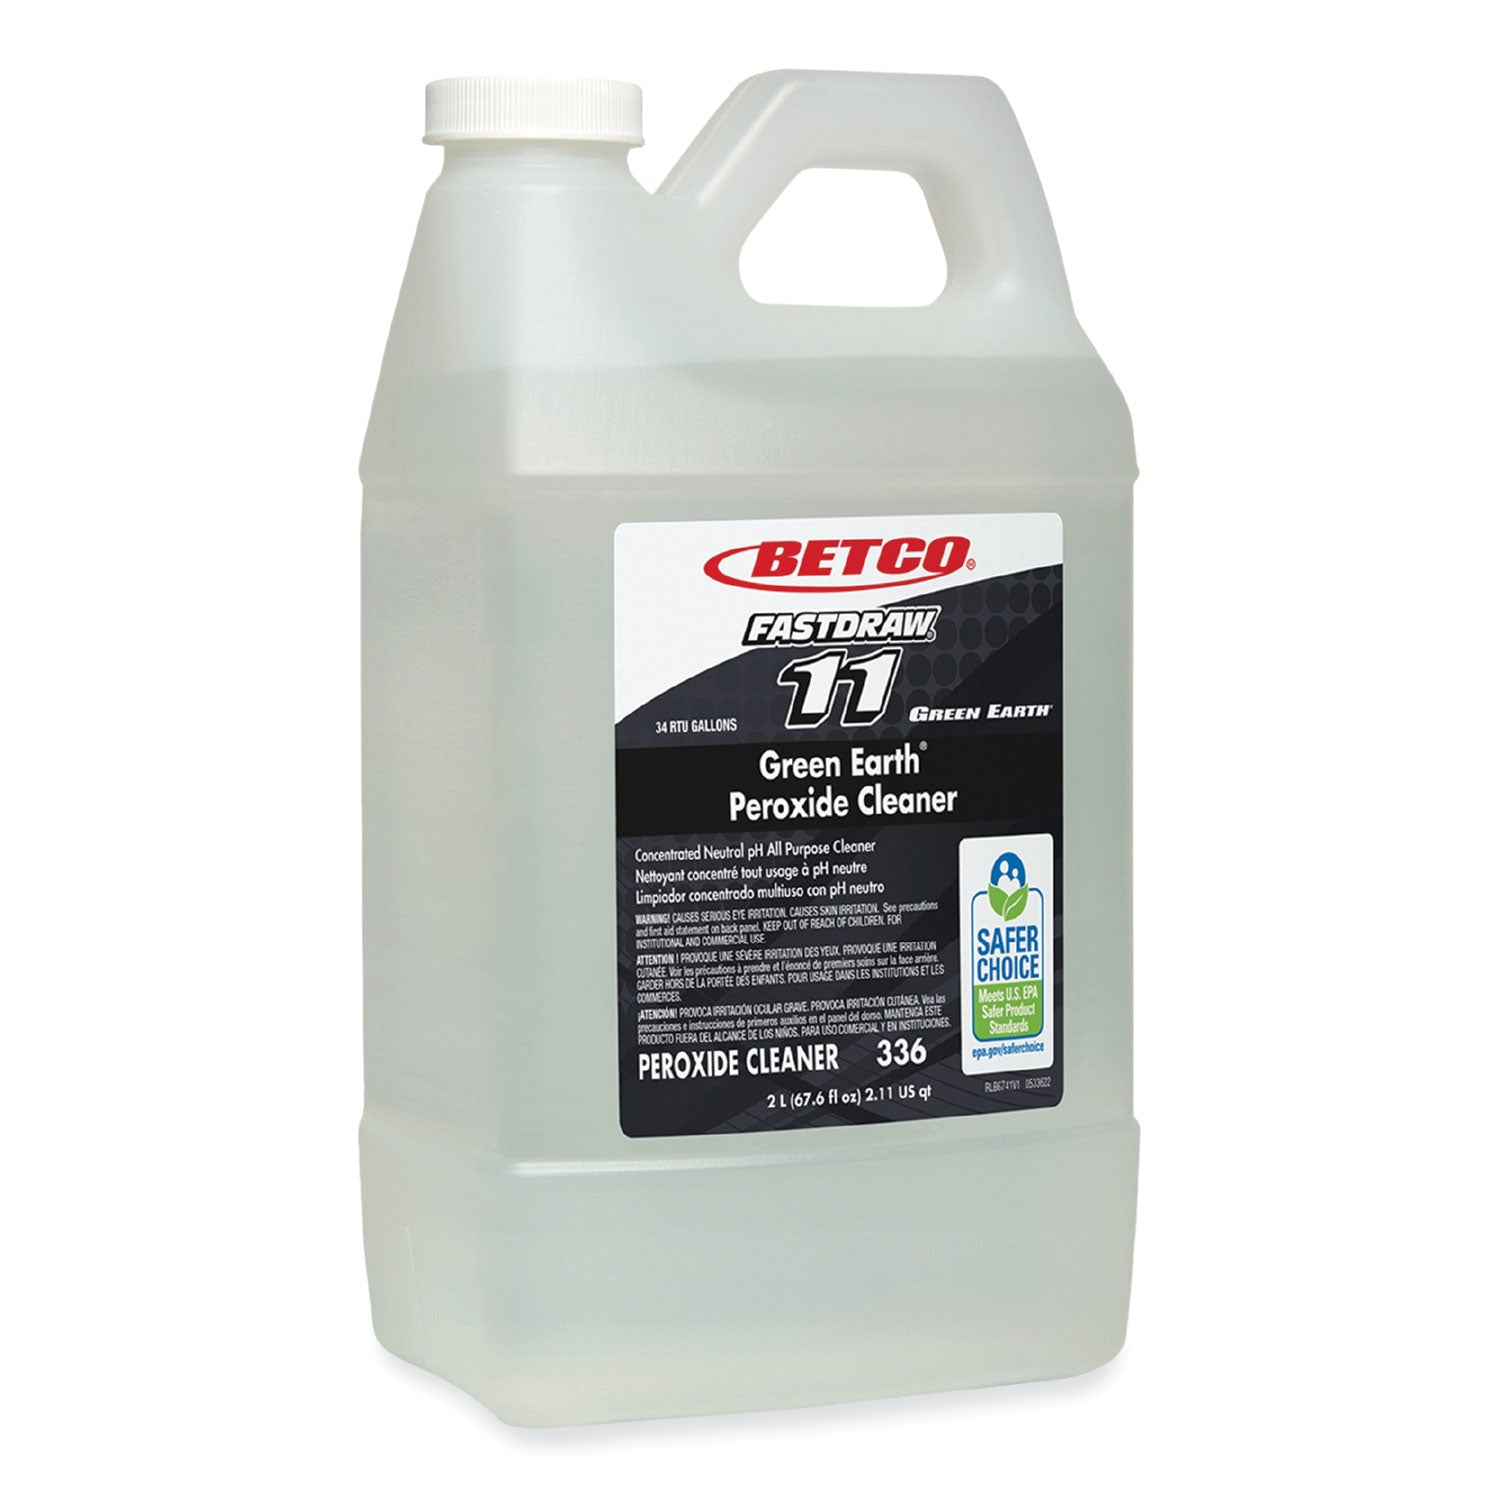 green-earth-peroxide-cleaner-fresh-mint-scent-2-l-bottle-4-carton_bet3364700 - 1